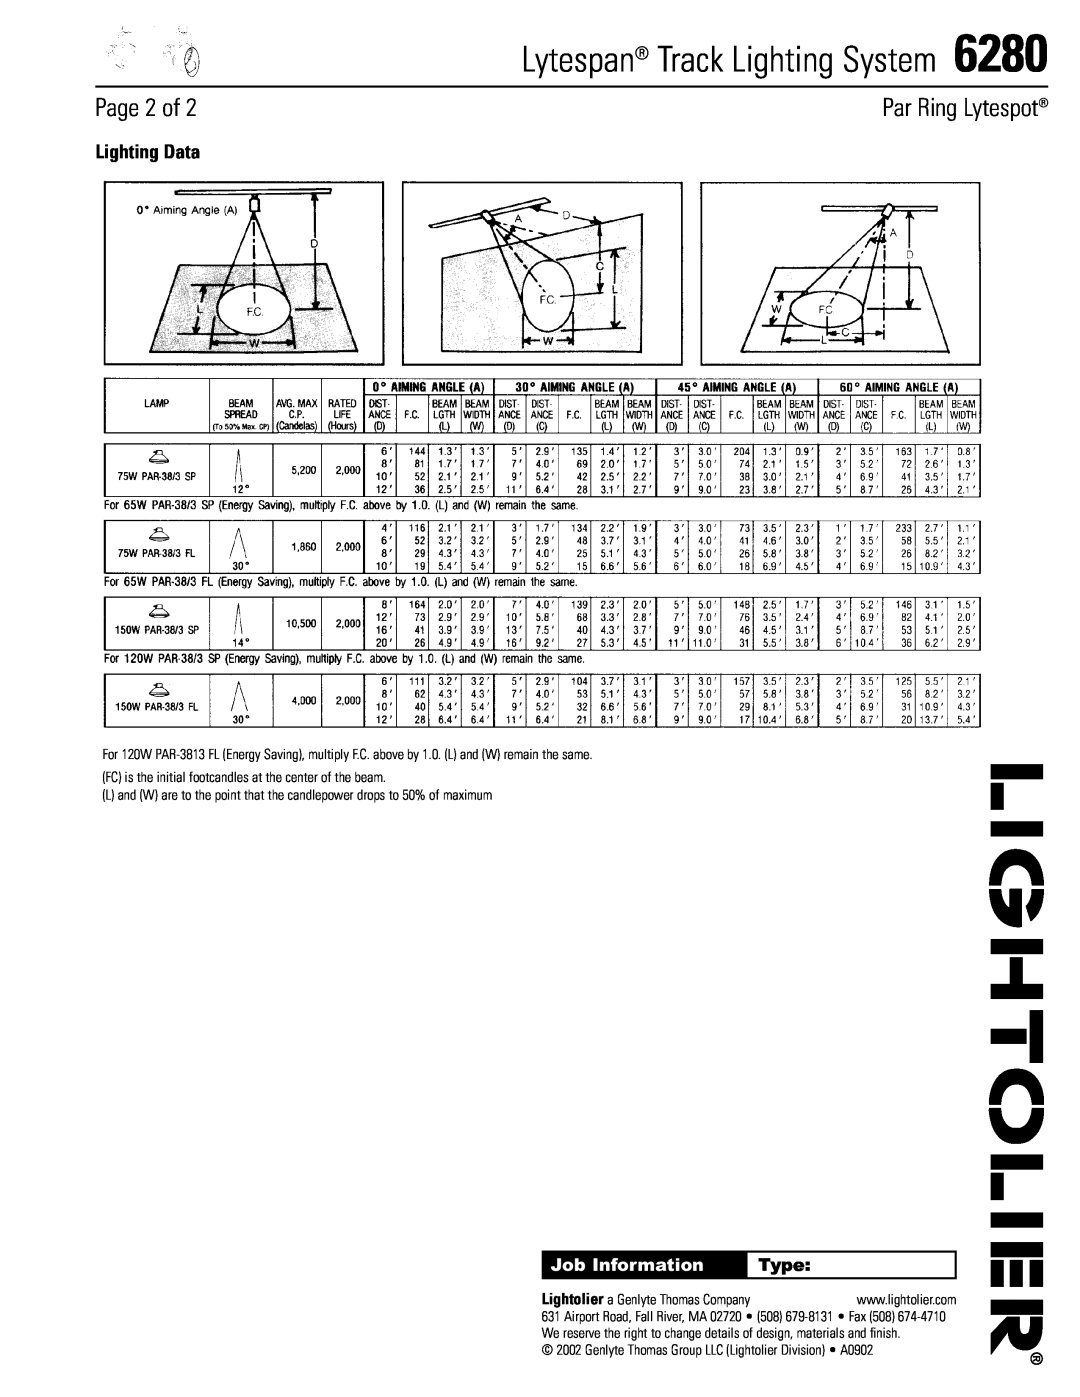 Lightolier 6280 Page 2 of, Lighting Data, Type, Lytespan Track Lighting System, Par Ring Lytespot, Job Information 